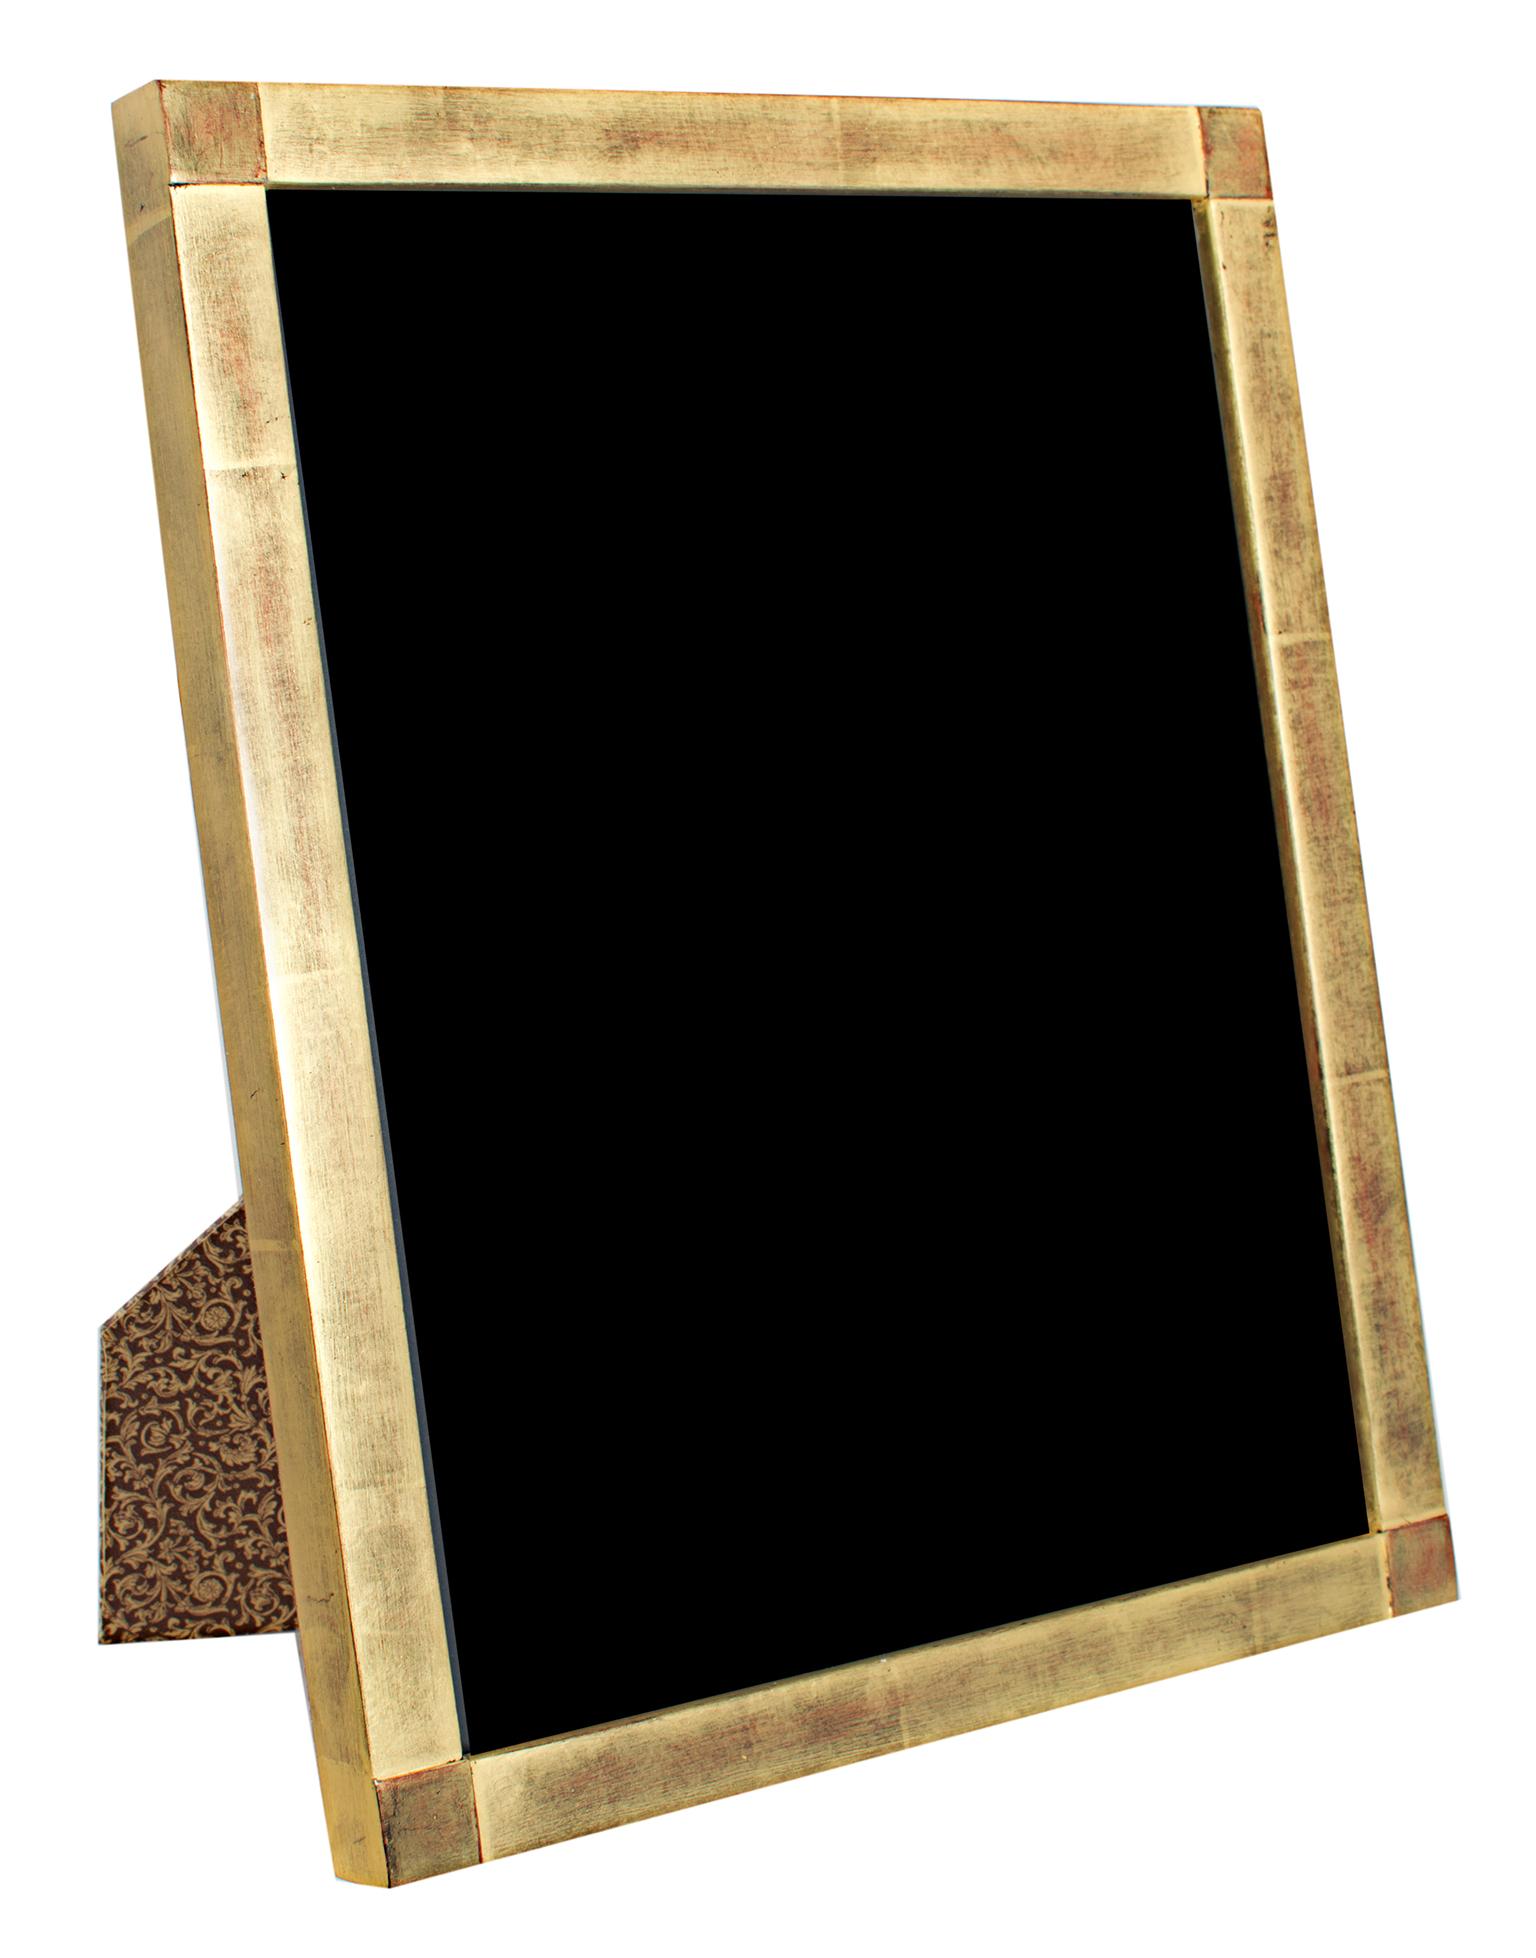 "Romanian Handmade Photo Frame, " 22K Gold Leaf & Wood 8 x 10 in Frame